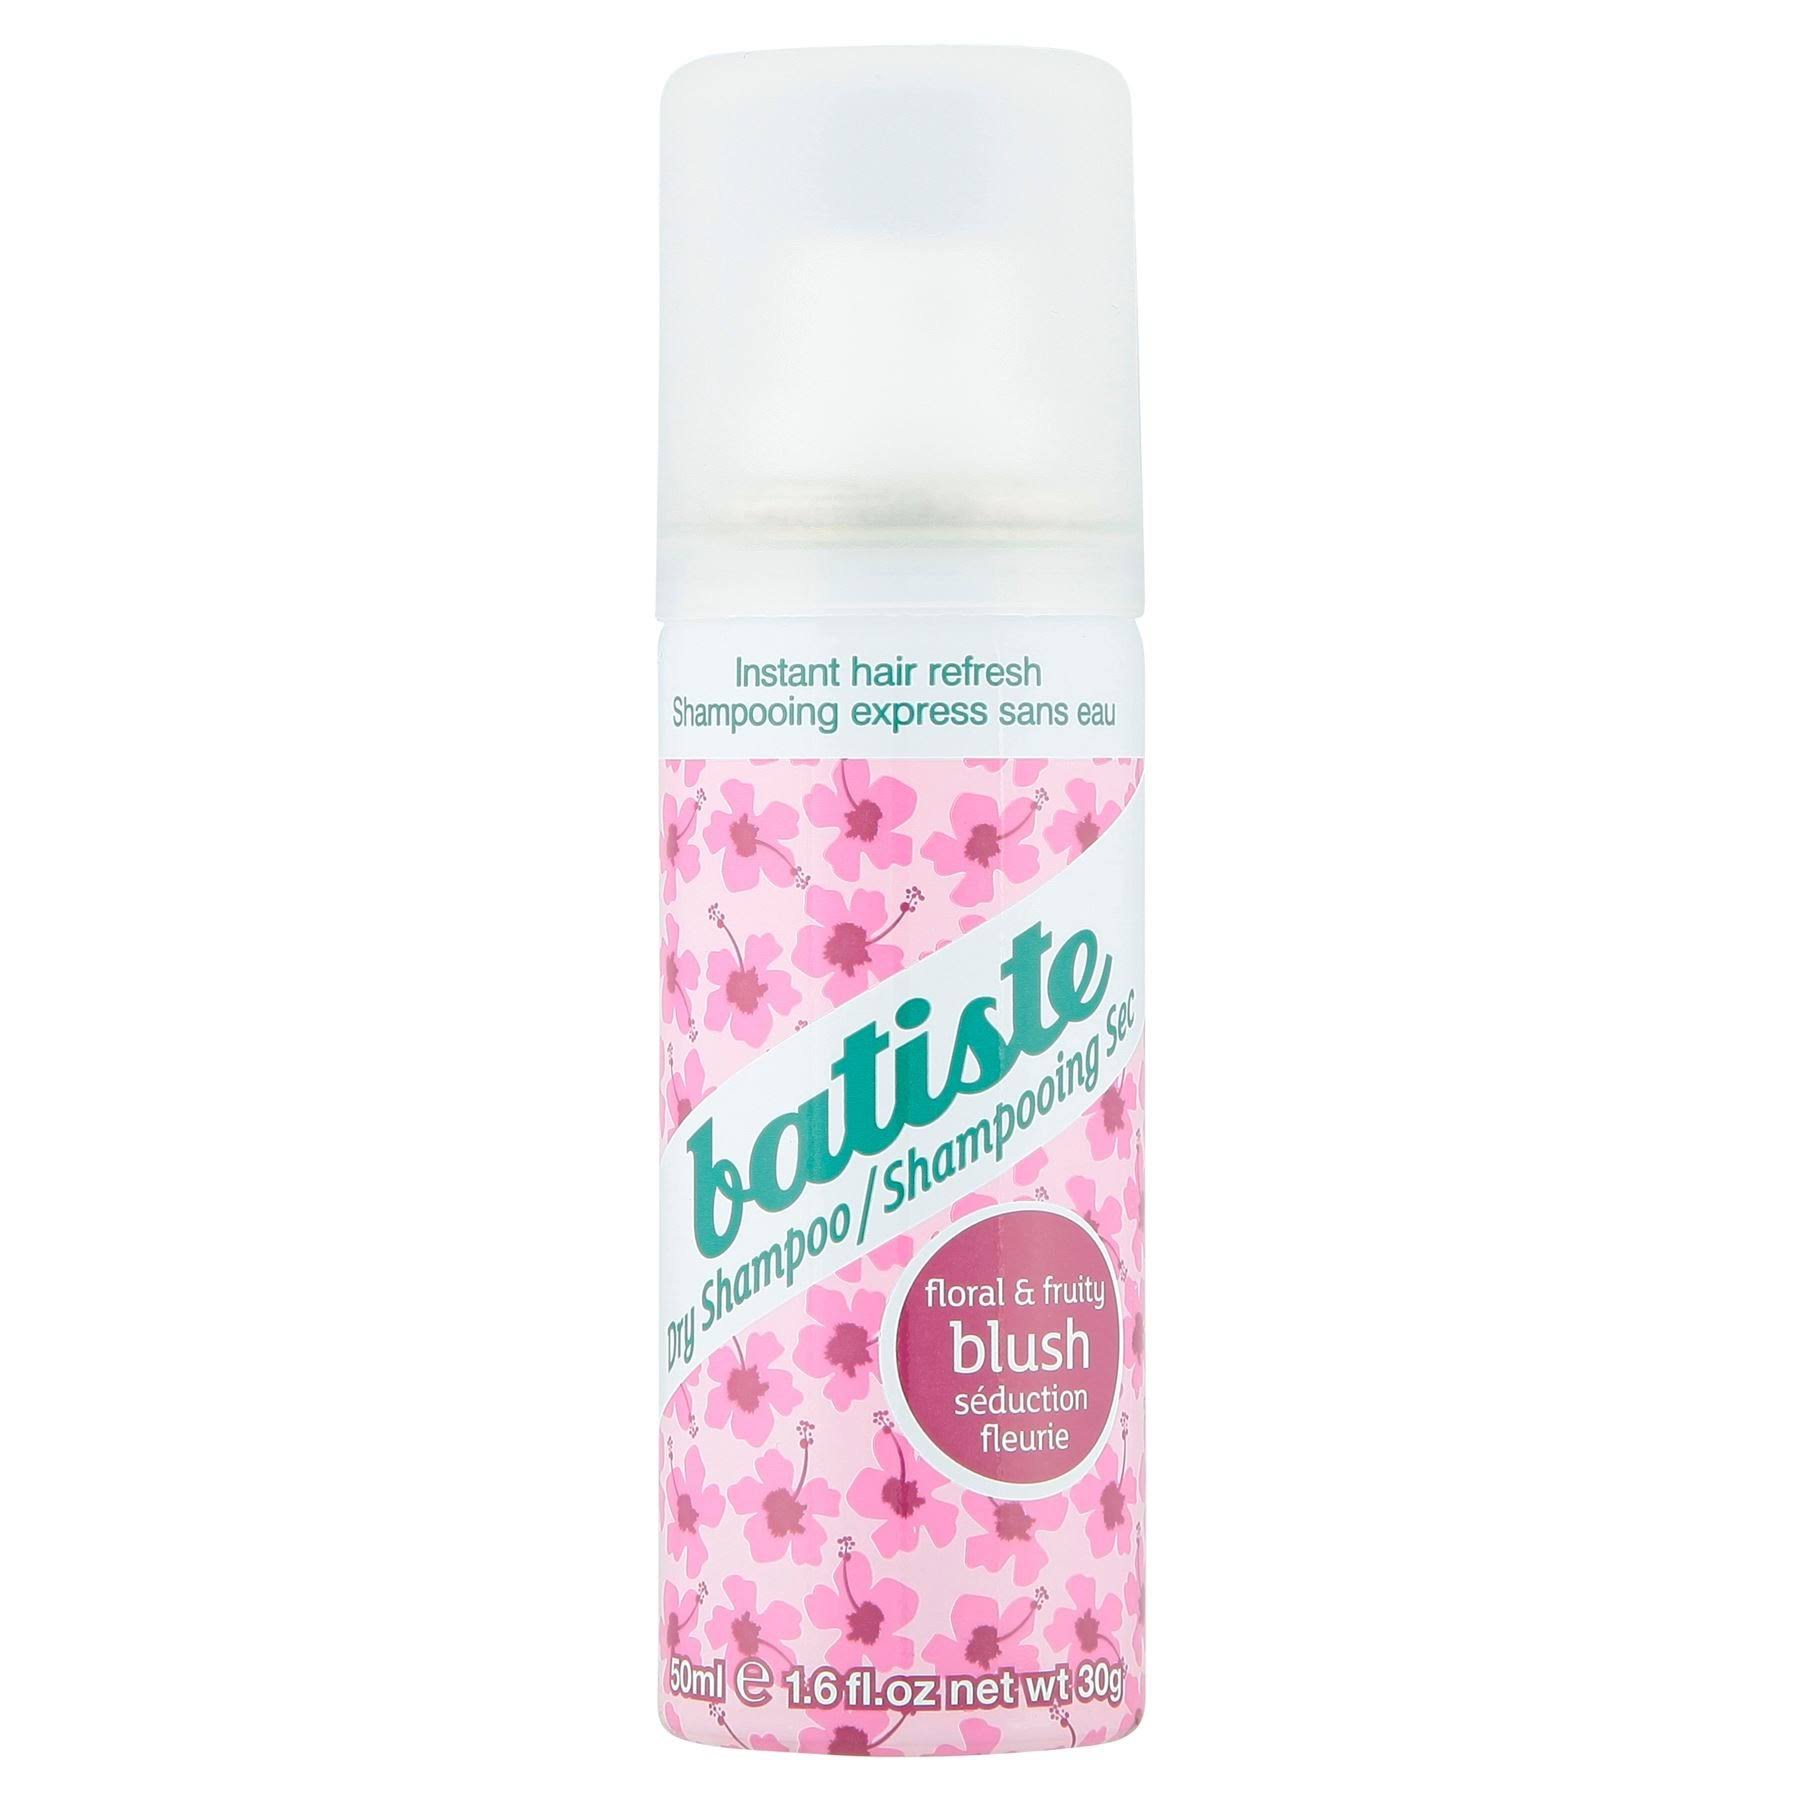 Batiste Instant Hair Refresh Dry Shampoo - Floral & Flirty Blush, 50ml